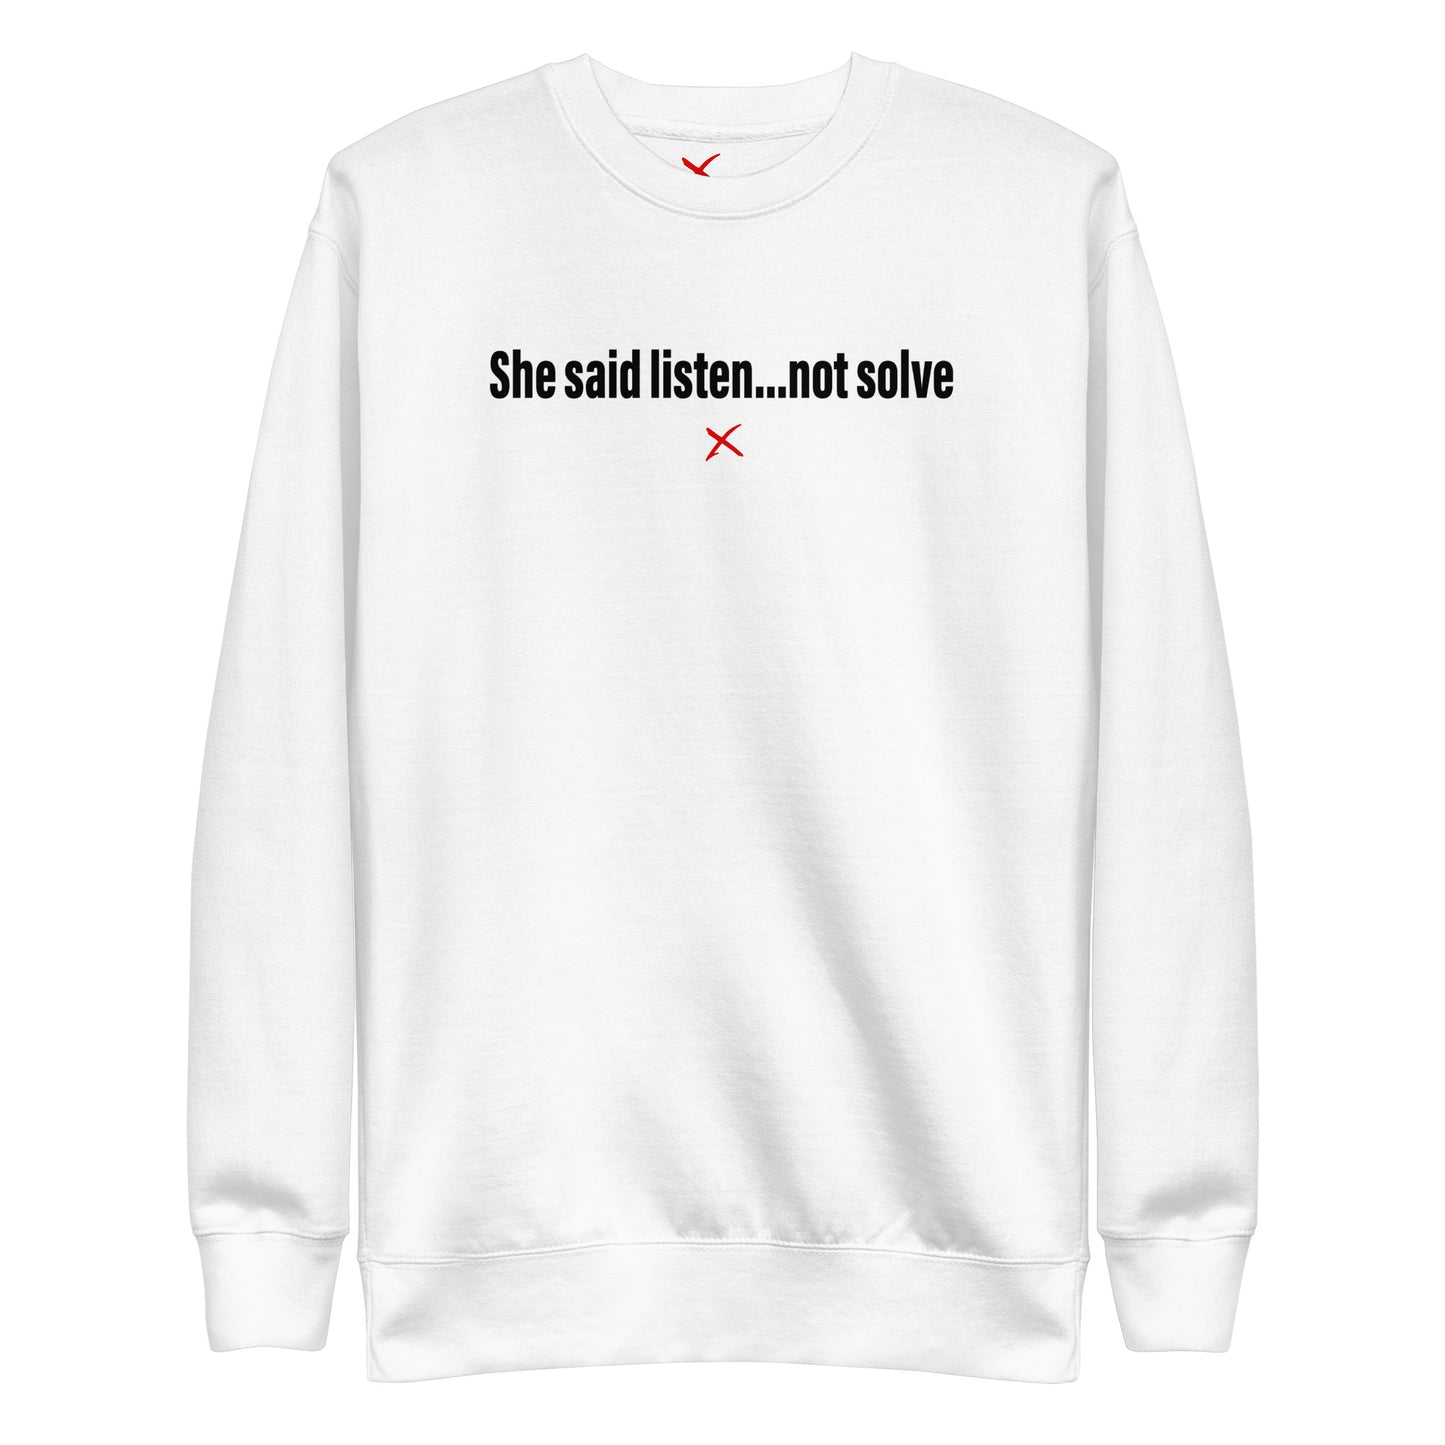 She said listen...not solve - Sweatshirt